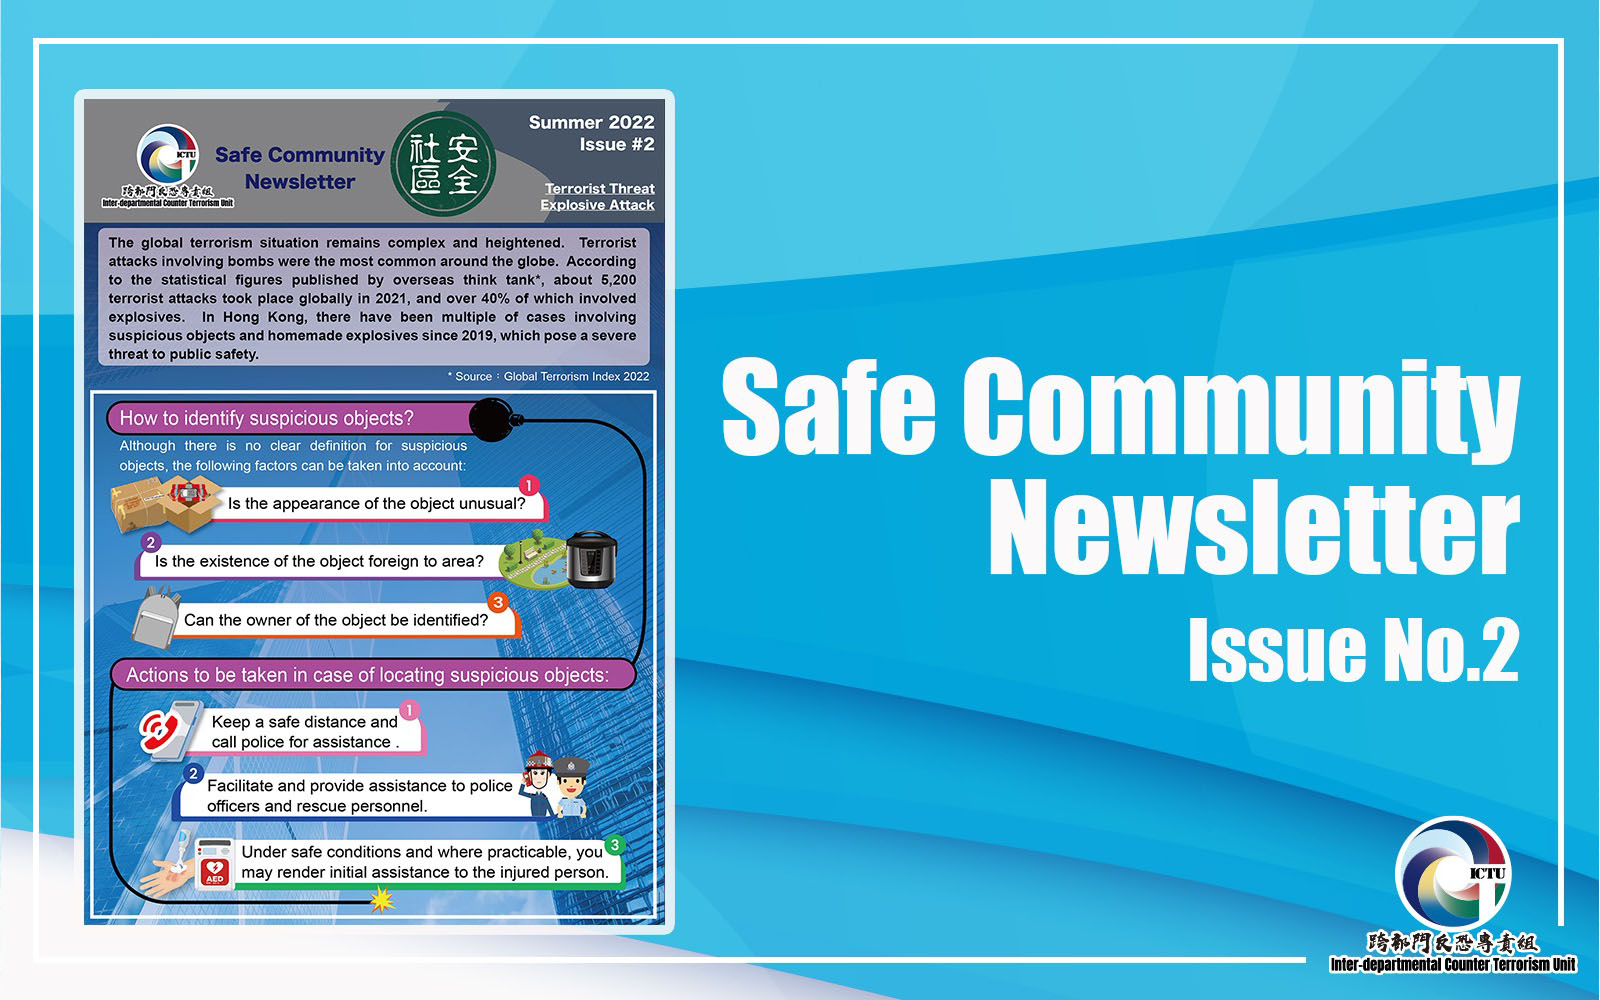 “Safe Community Newsletter” Issue No.2